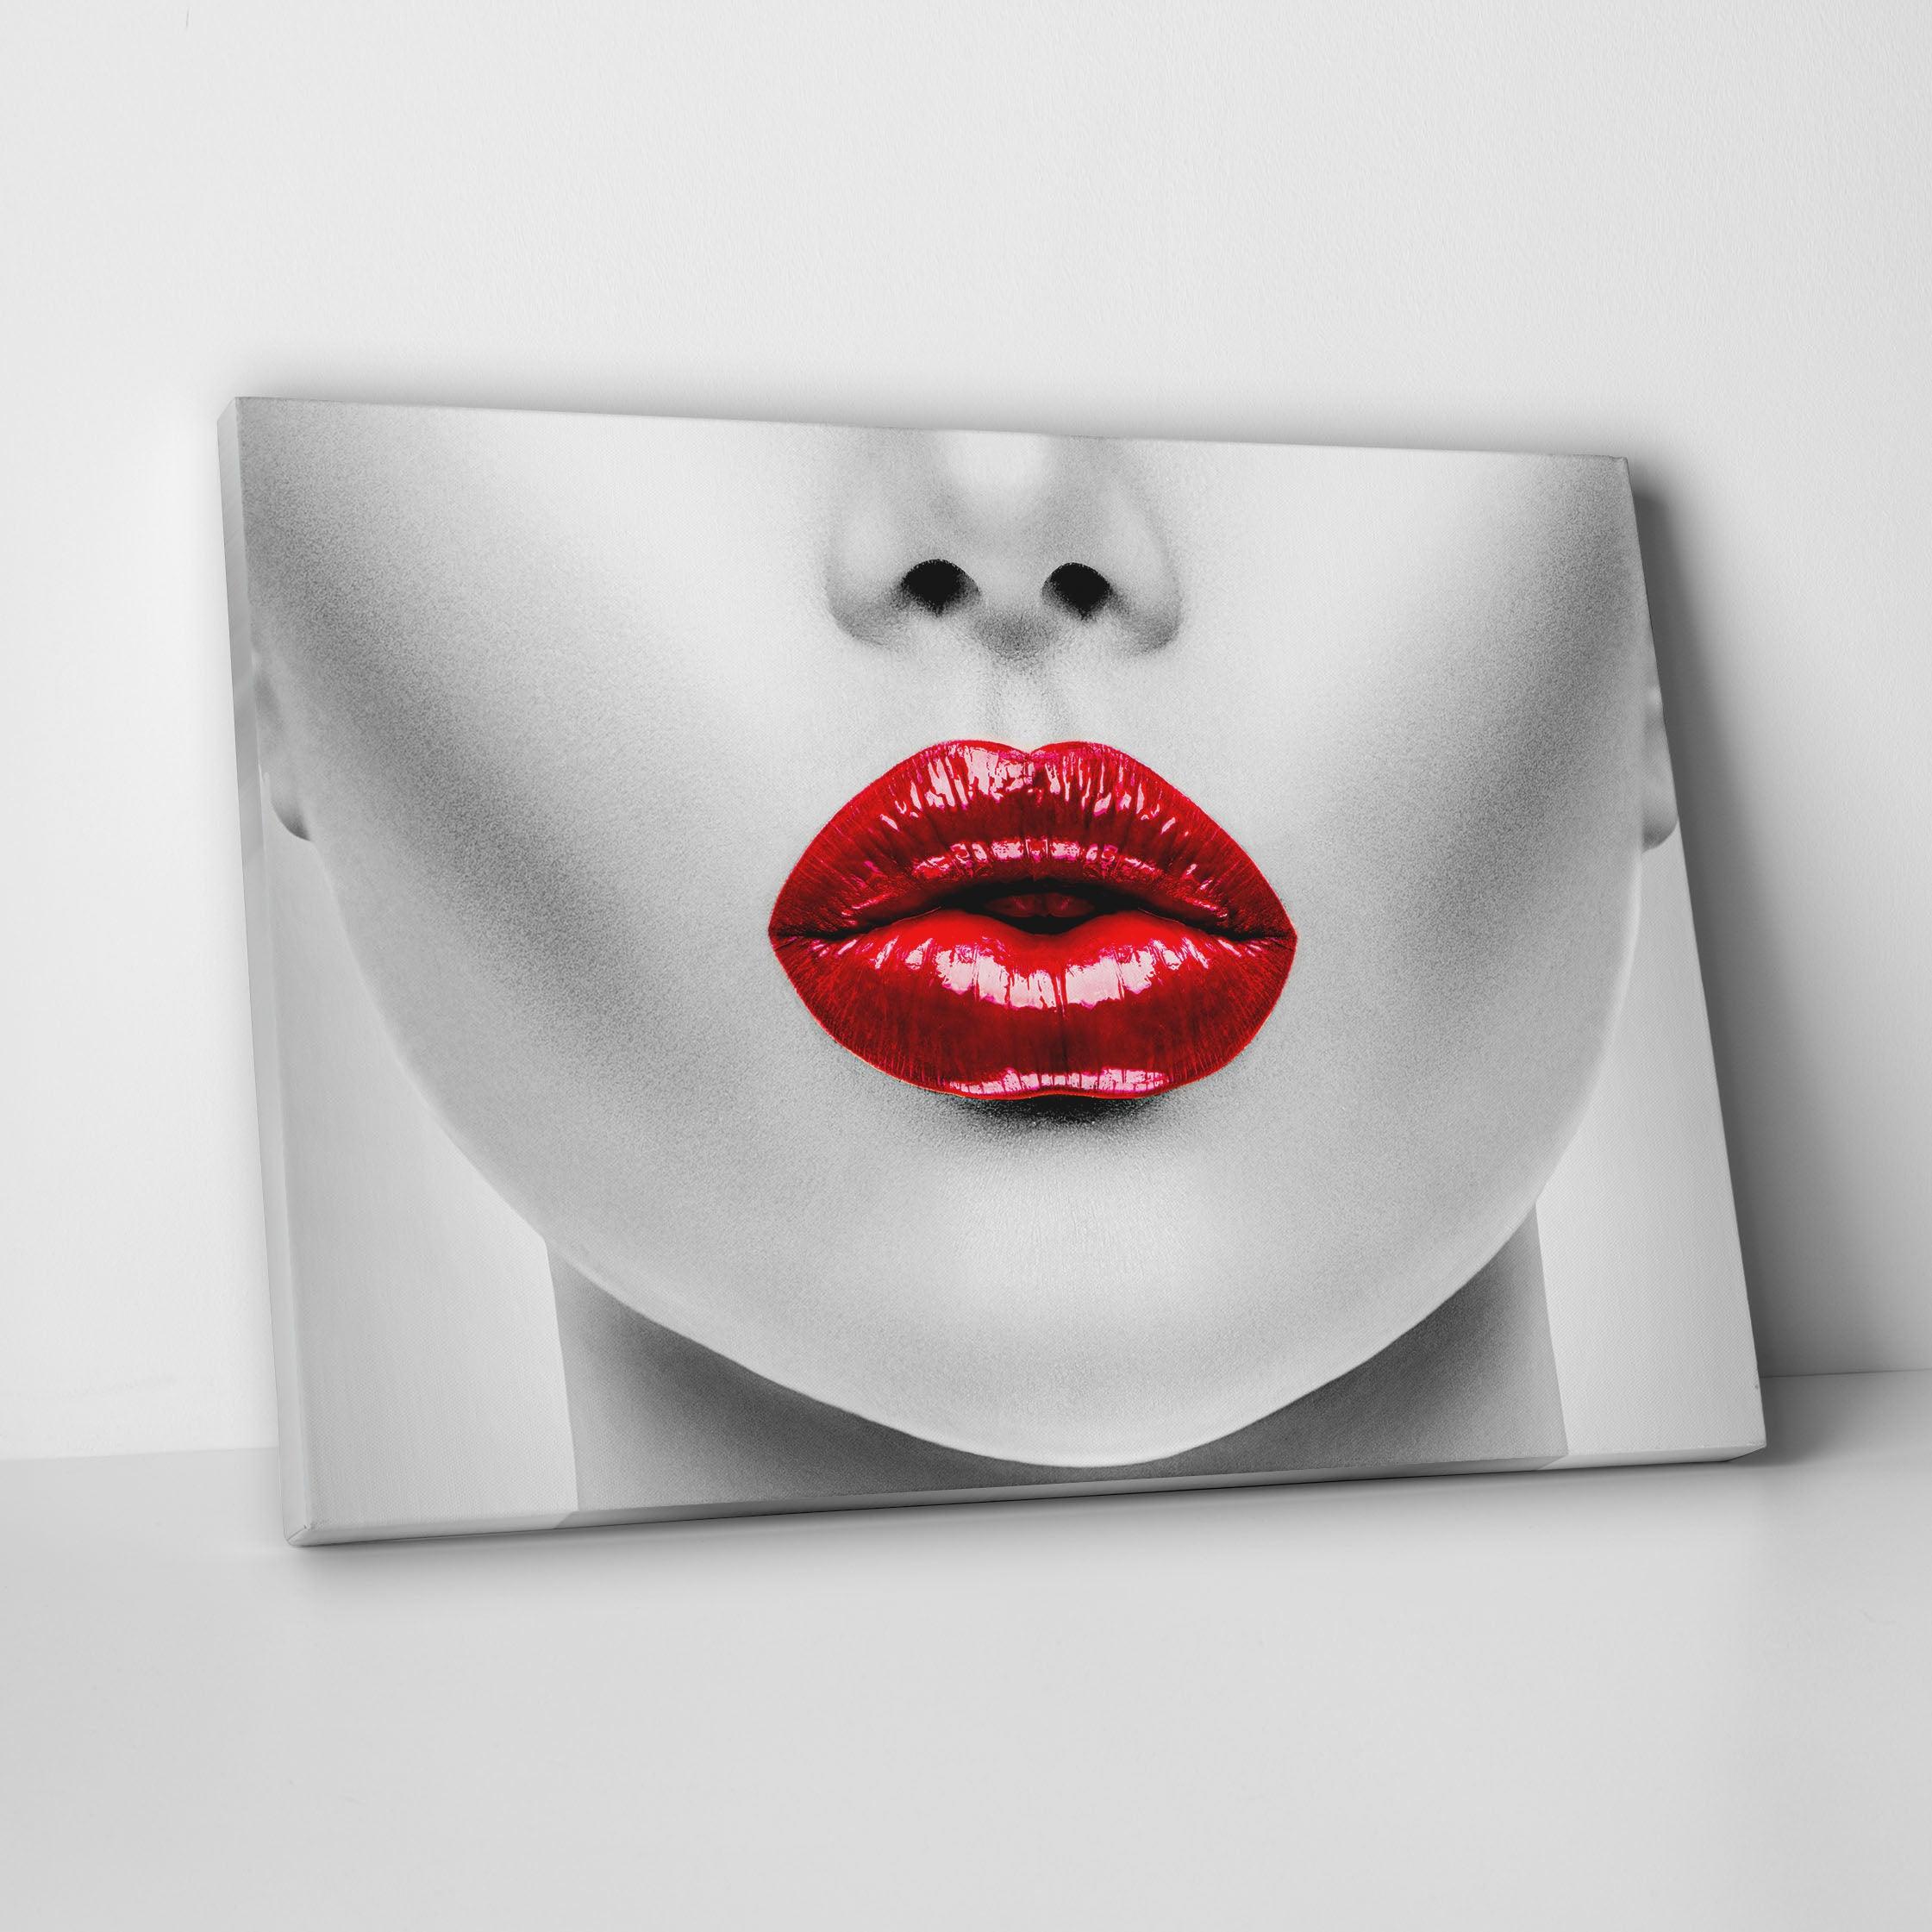 Red Lips Wall Art Canvas - SharpWallArts